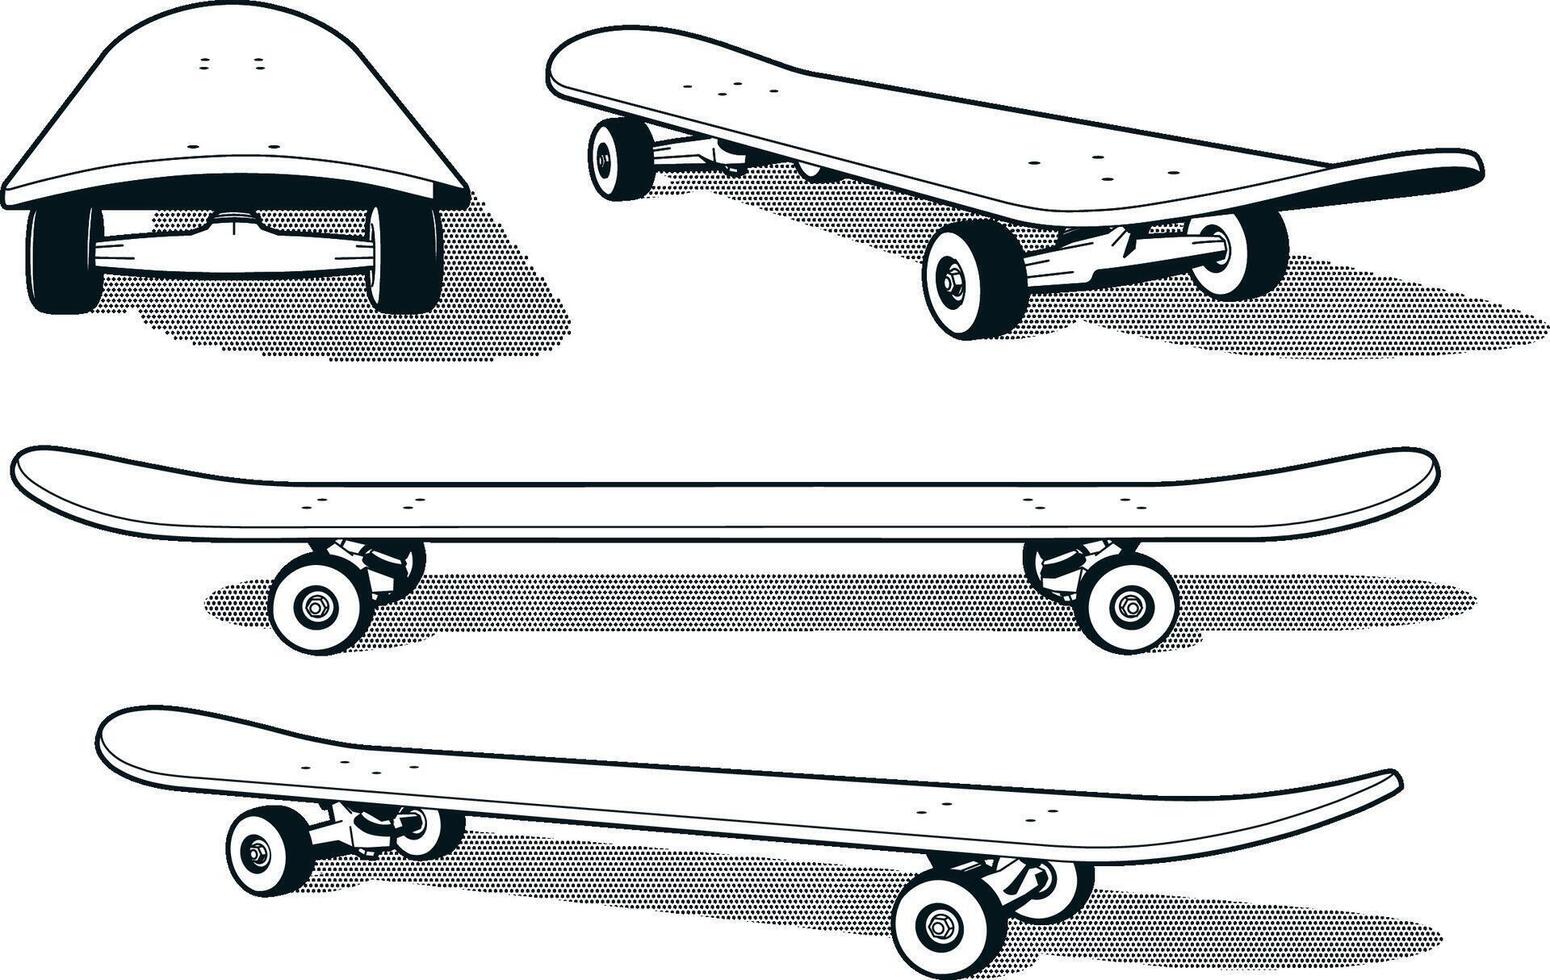 Skateboard in various angles - retro print vector